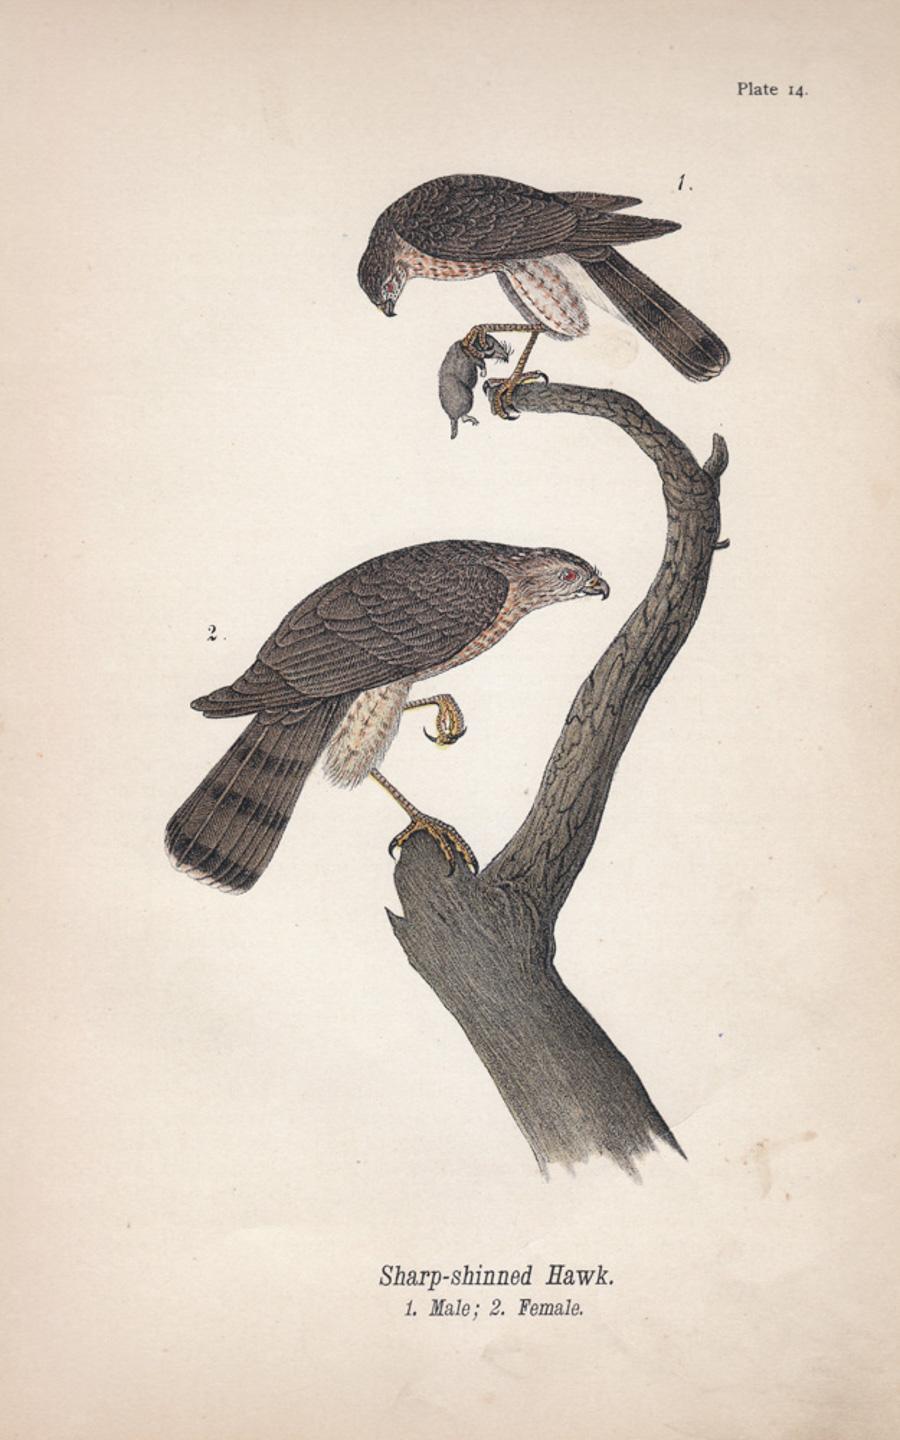 After John James Audubon Animal Print - Sharp-shinned Hawk; Plate 14